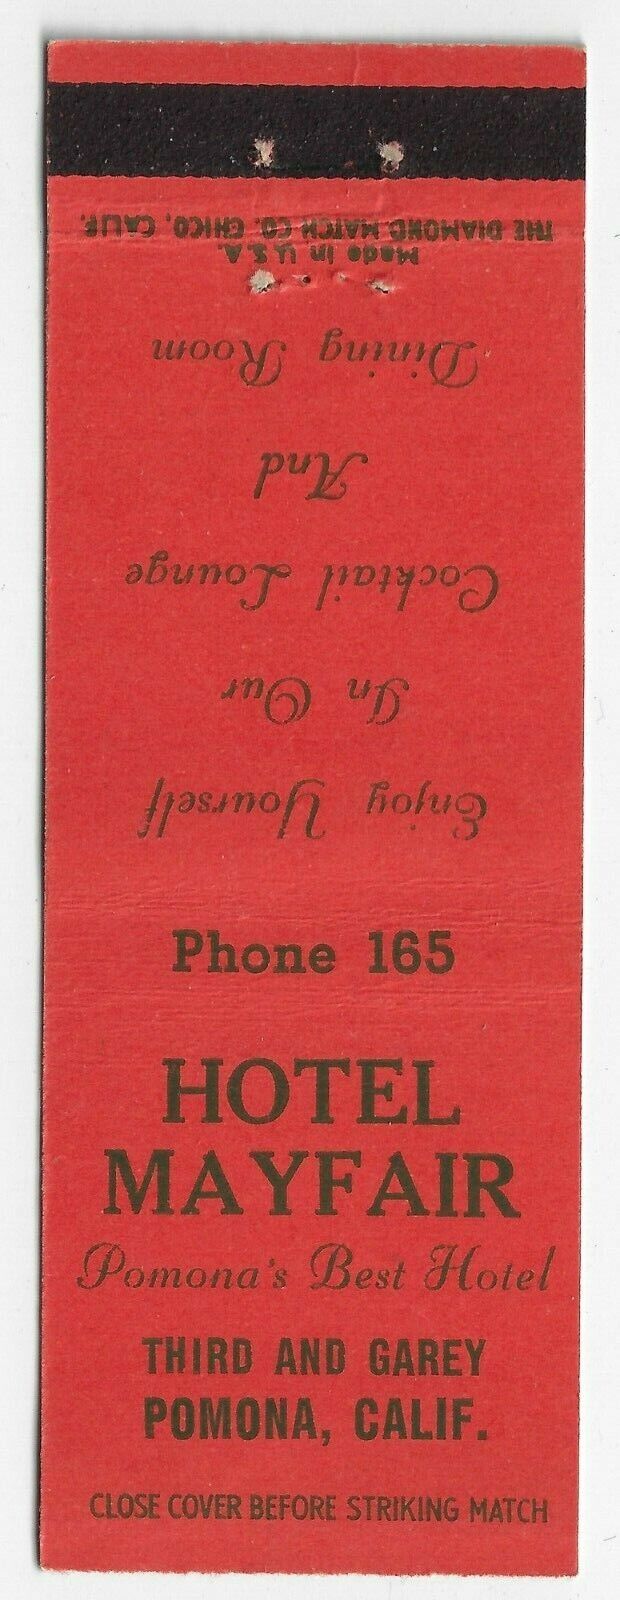 Hotel Mayfair Pomona Calif. Phone 165 Empty Matchcover